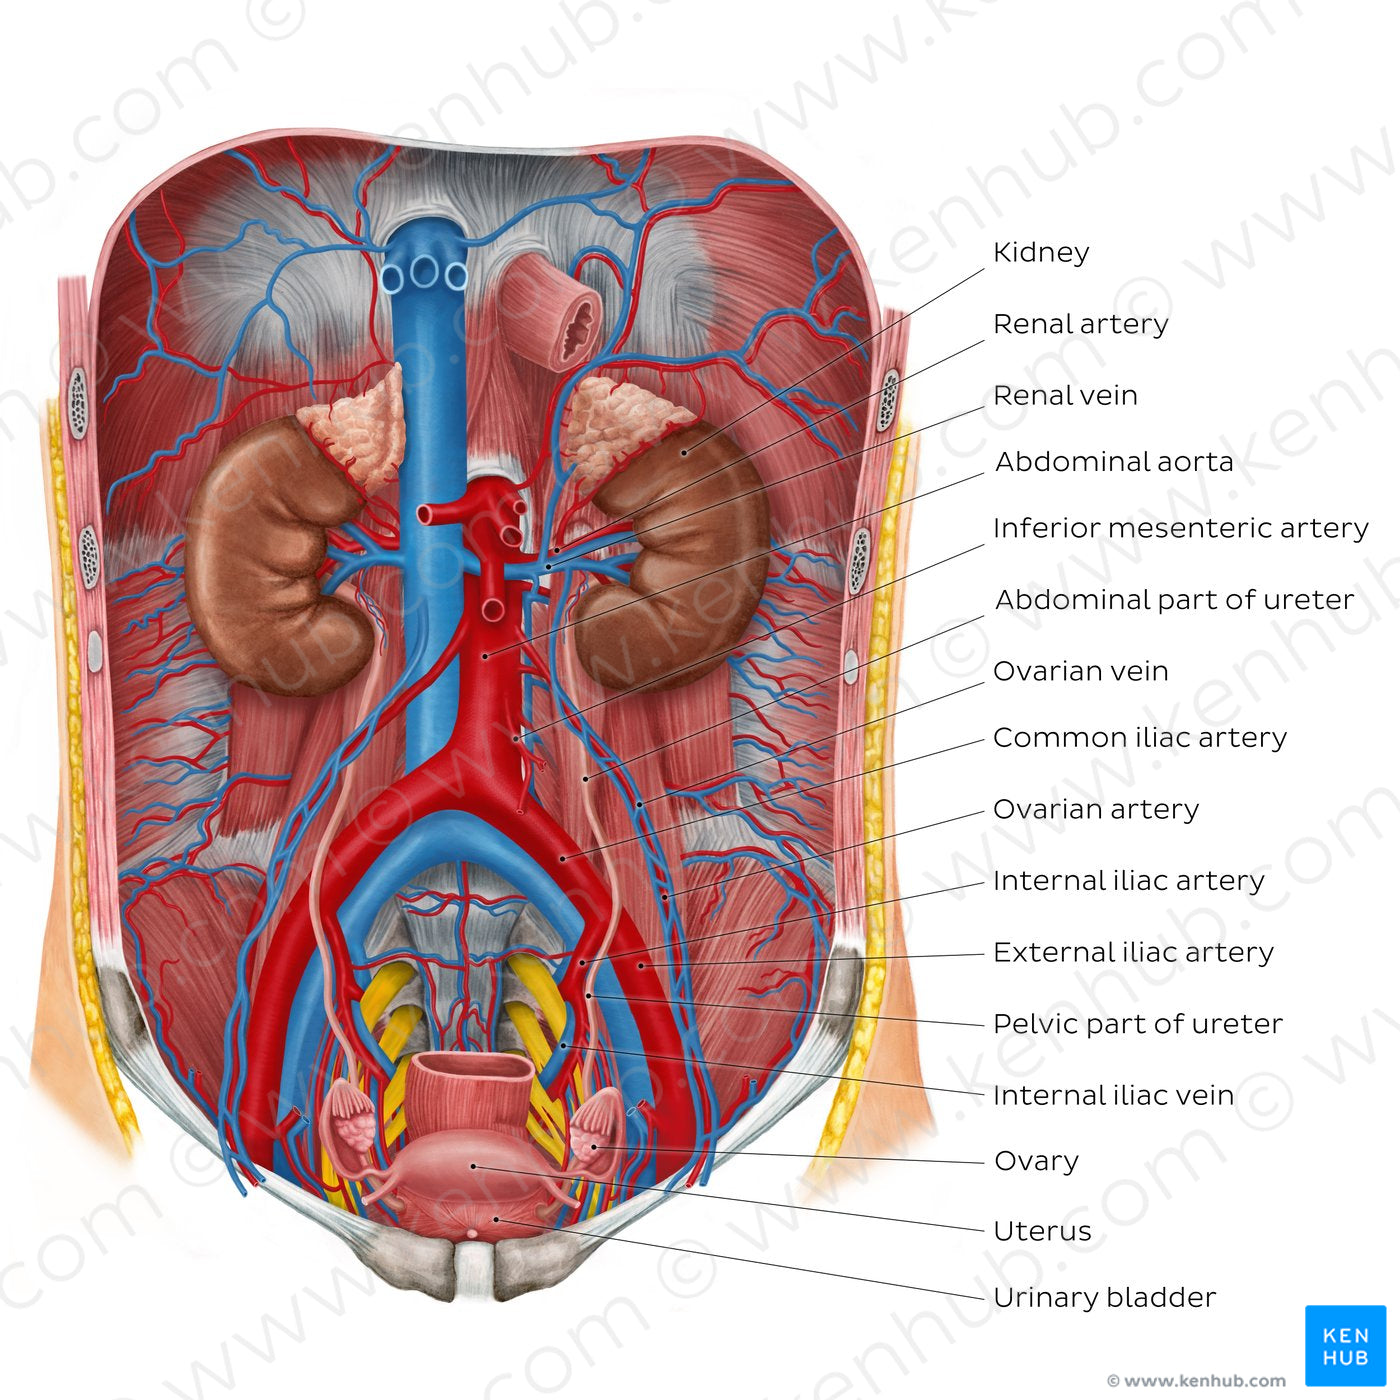 Ureters in situ (English)